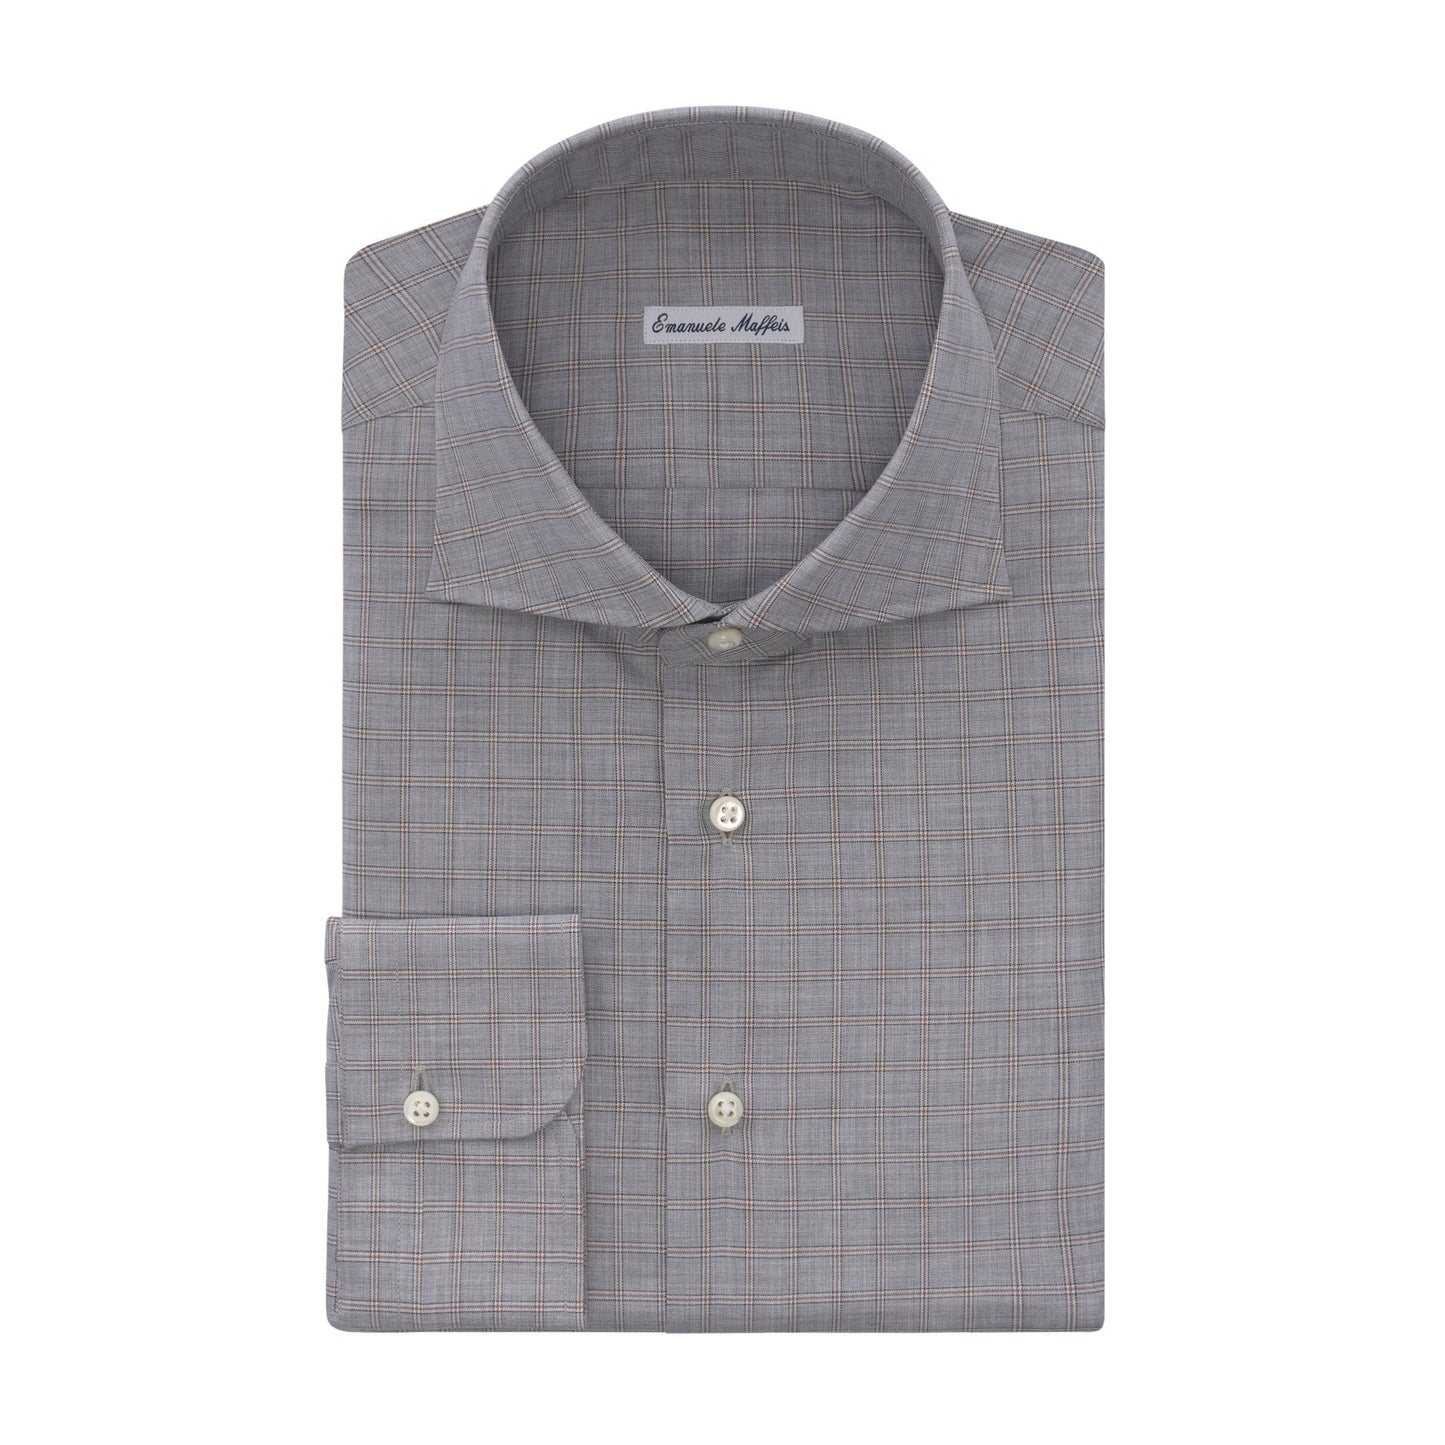 Emanuele Maffeis Checked Cotton Grey Shirt with Cutaway Collar - SARTALE